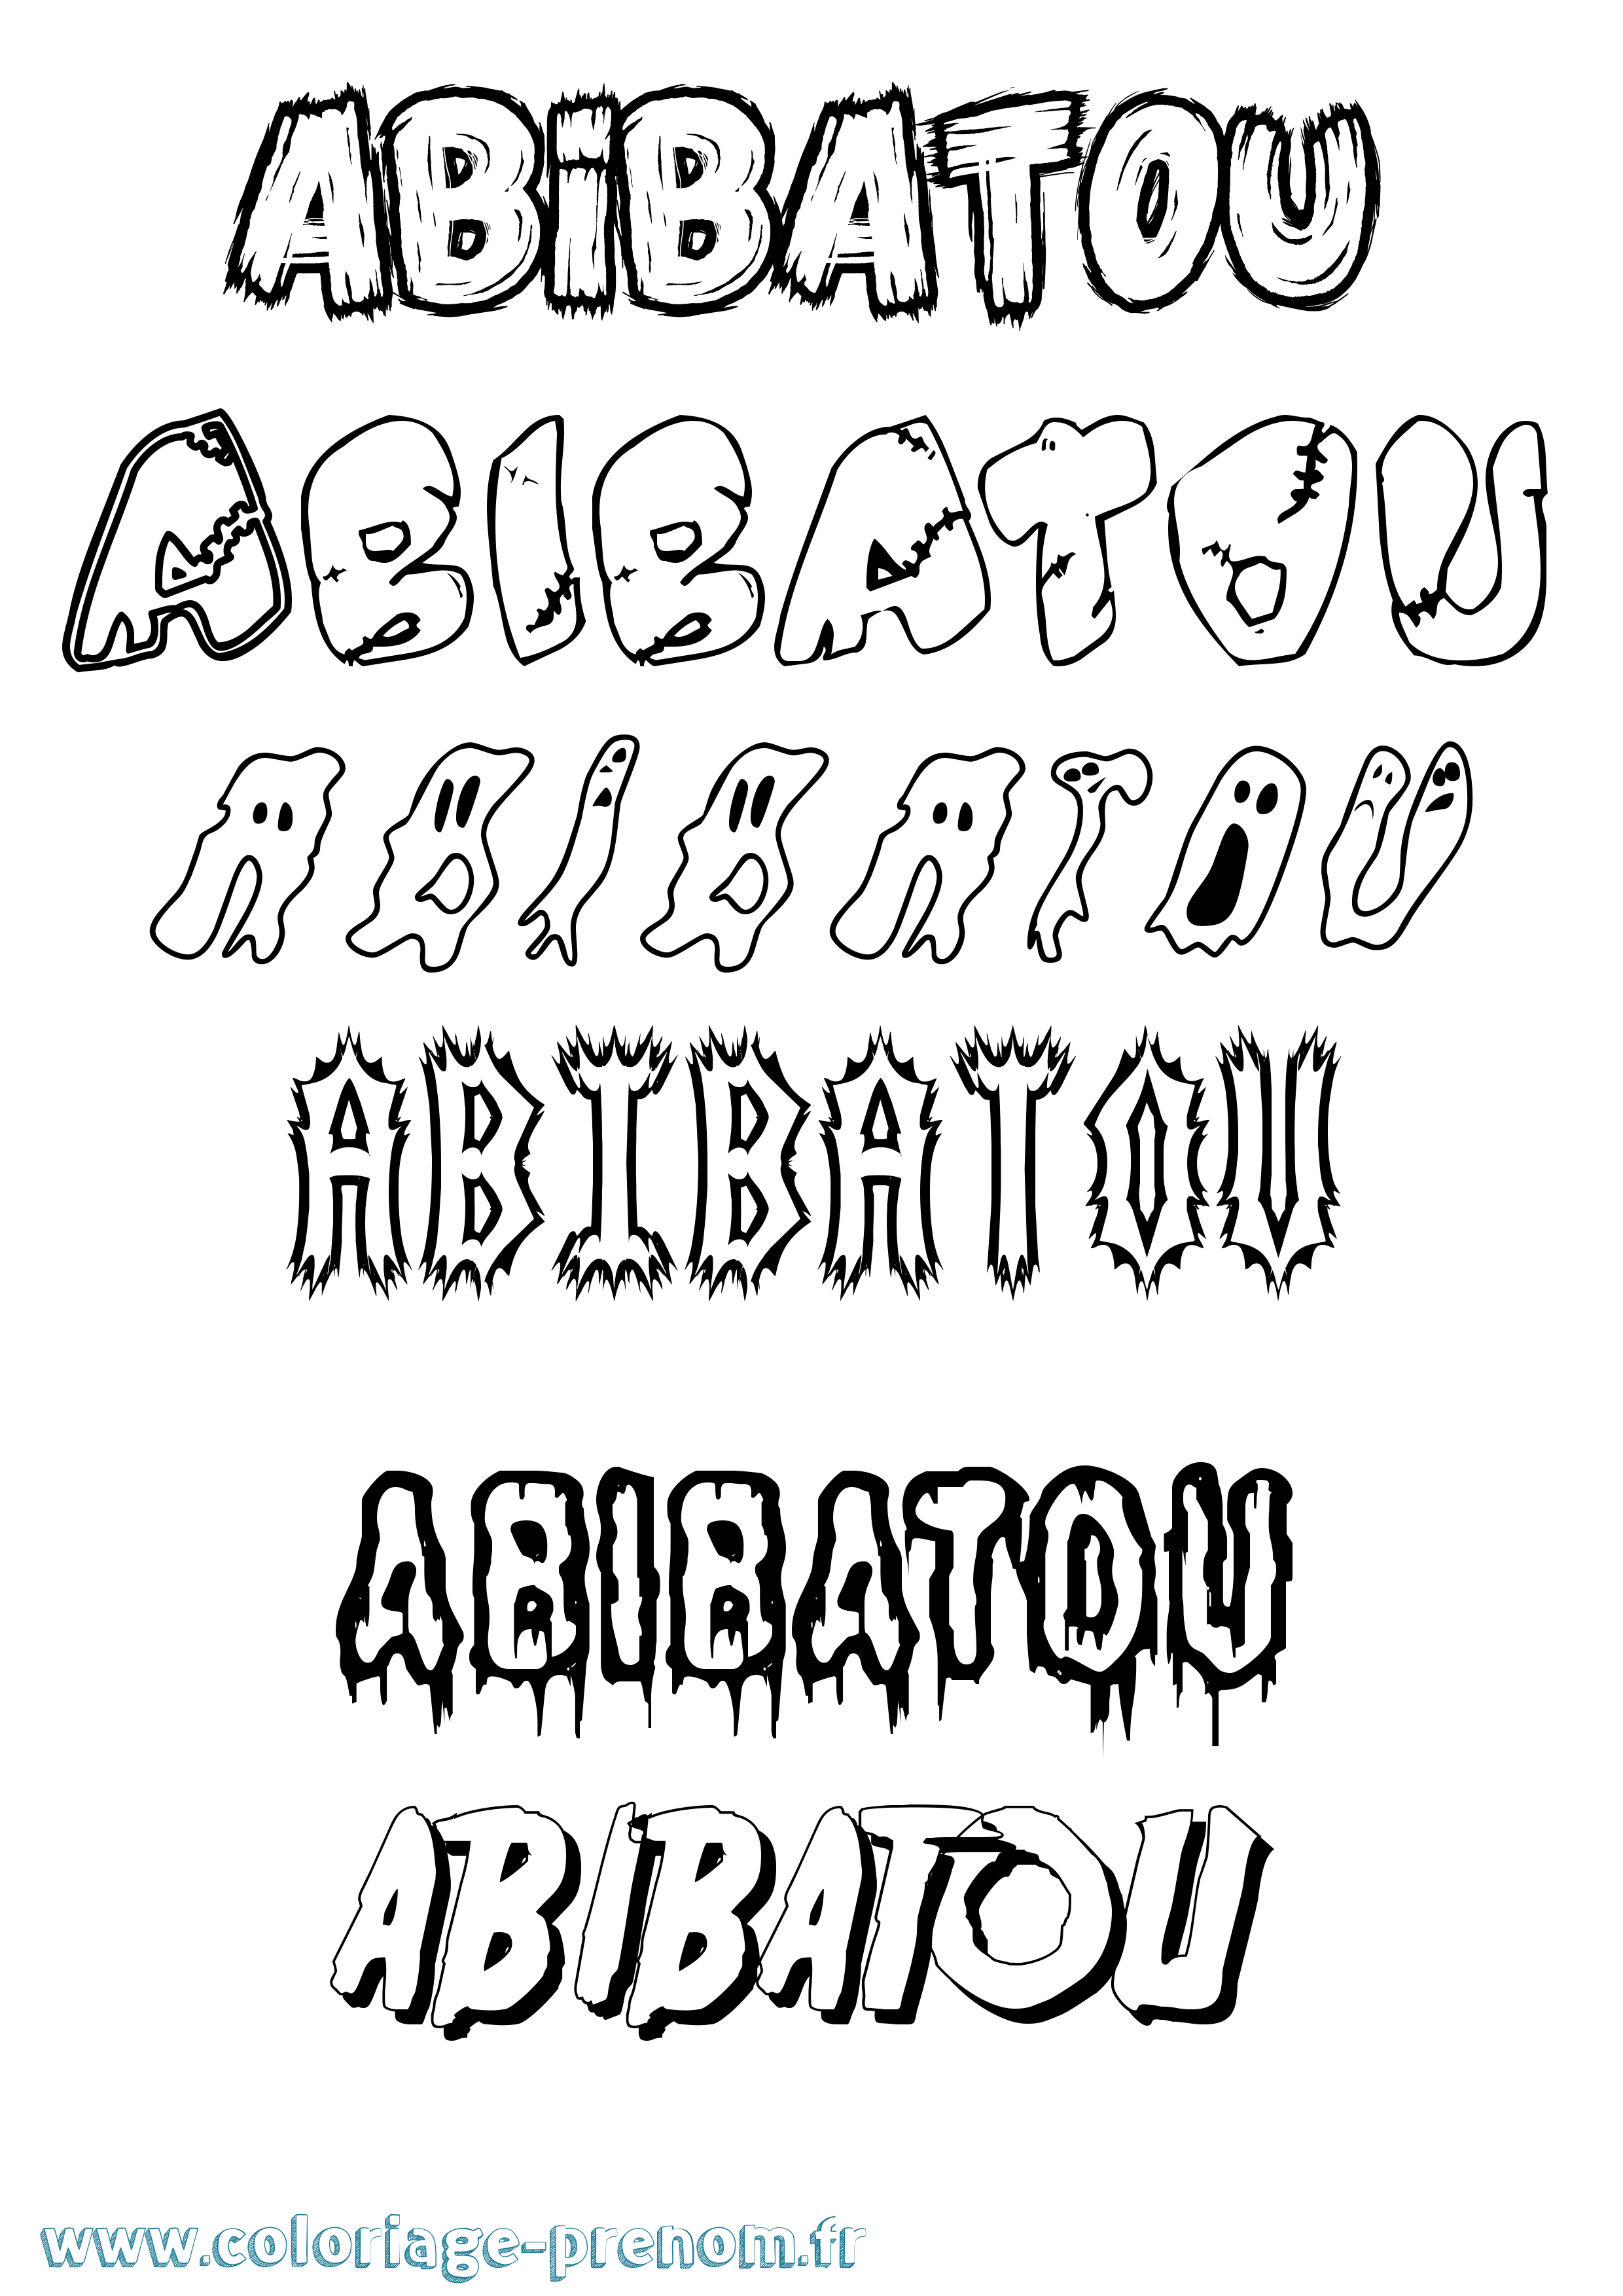 Coloriage prénom Abibatou Frisson